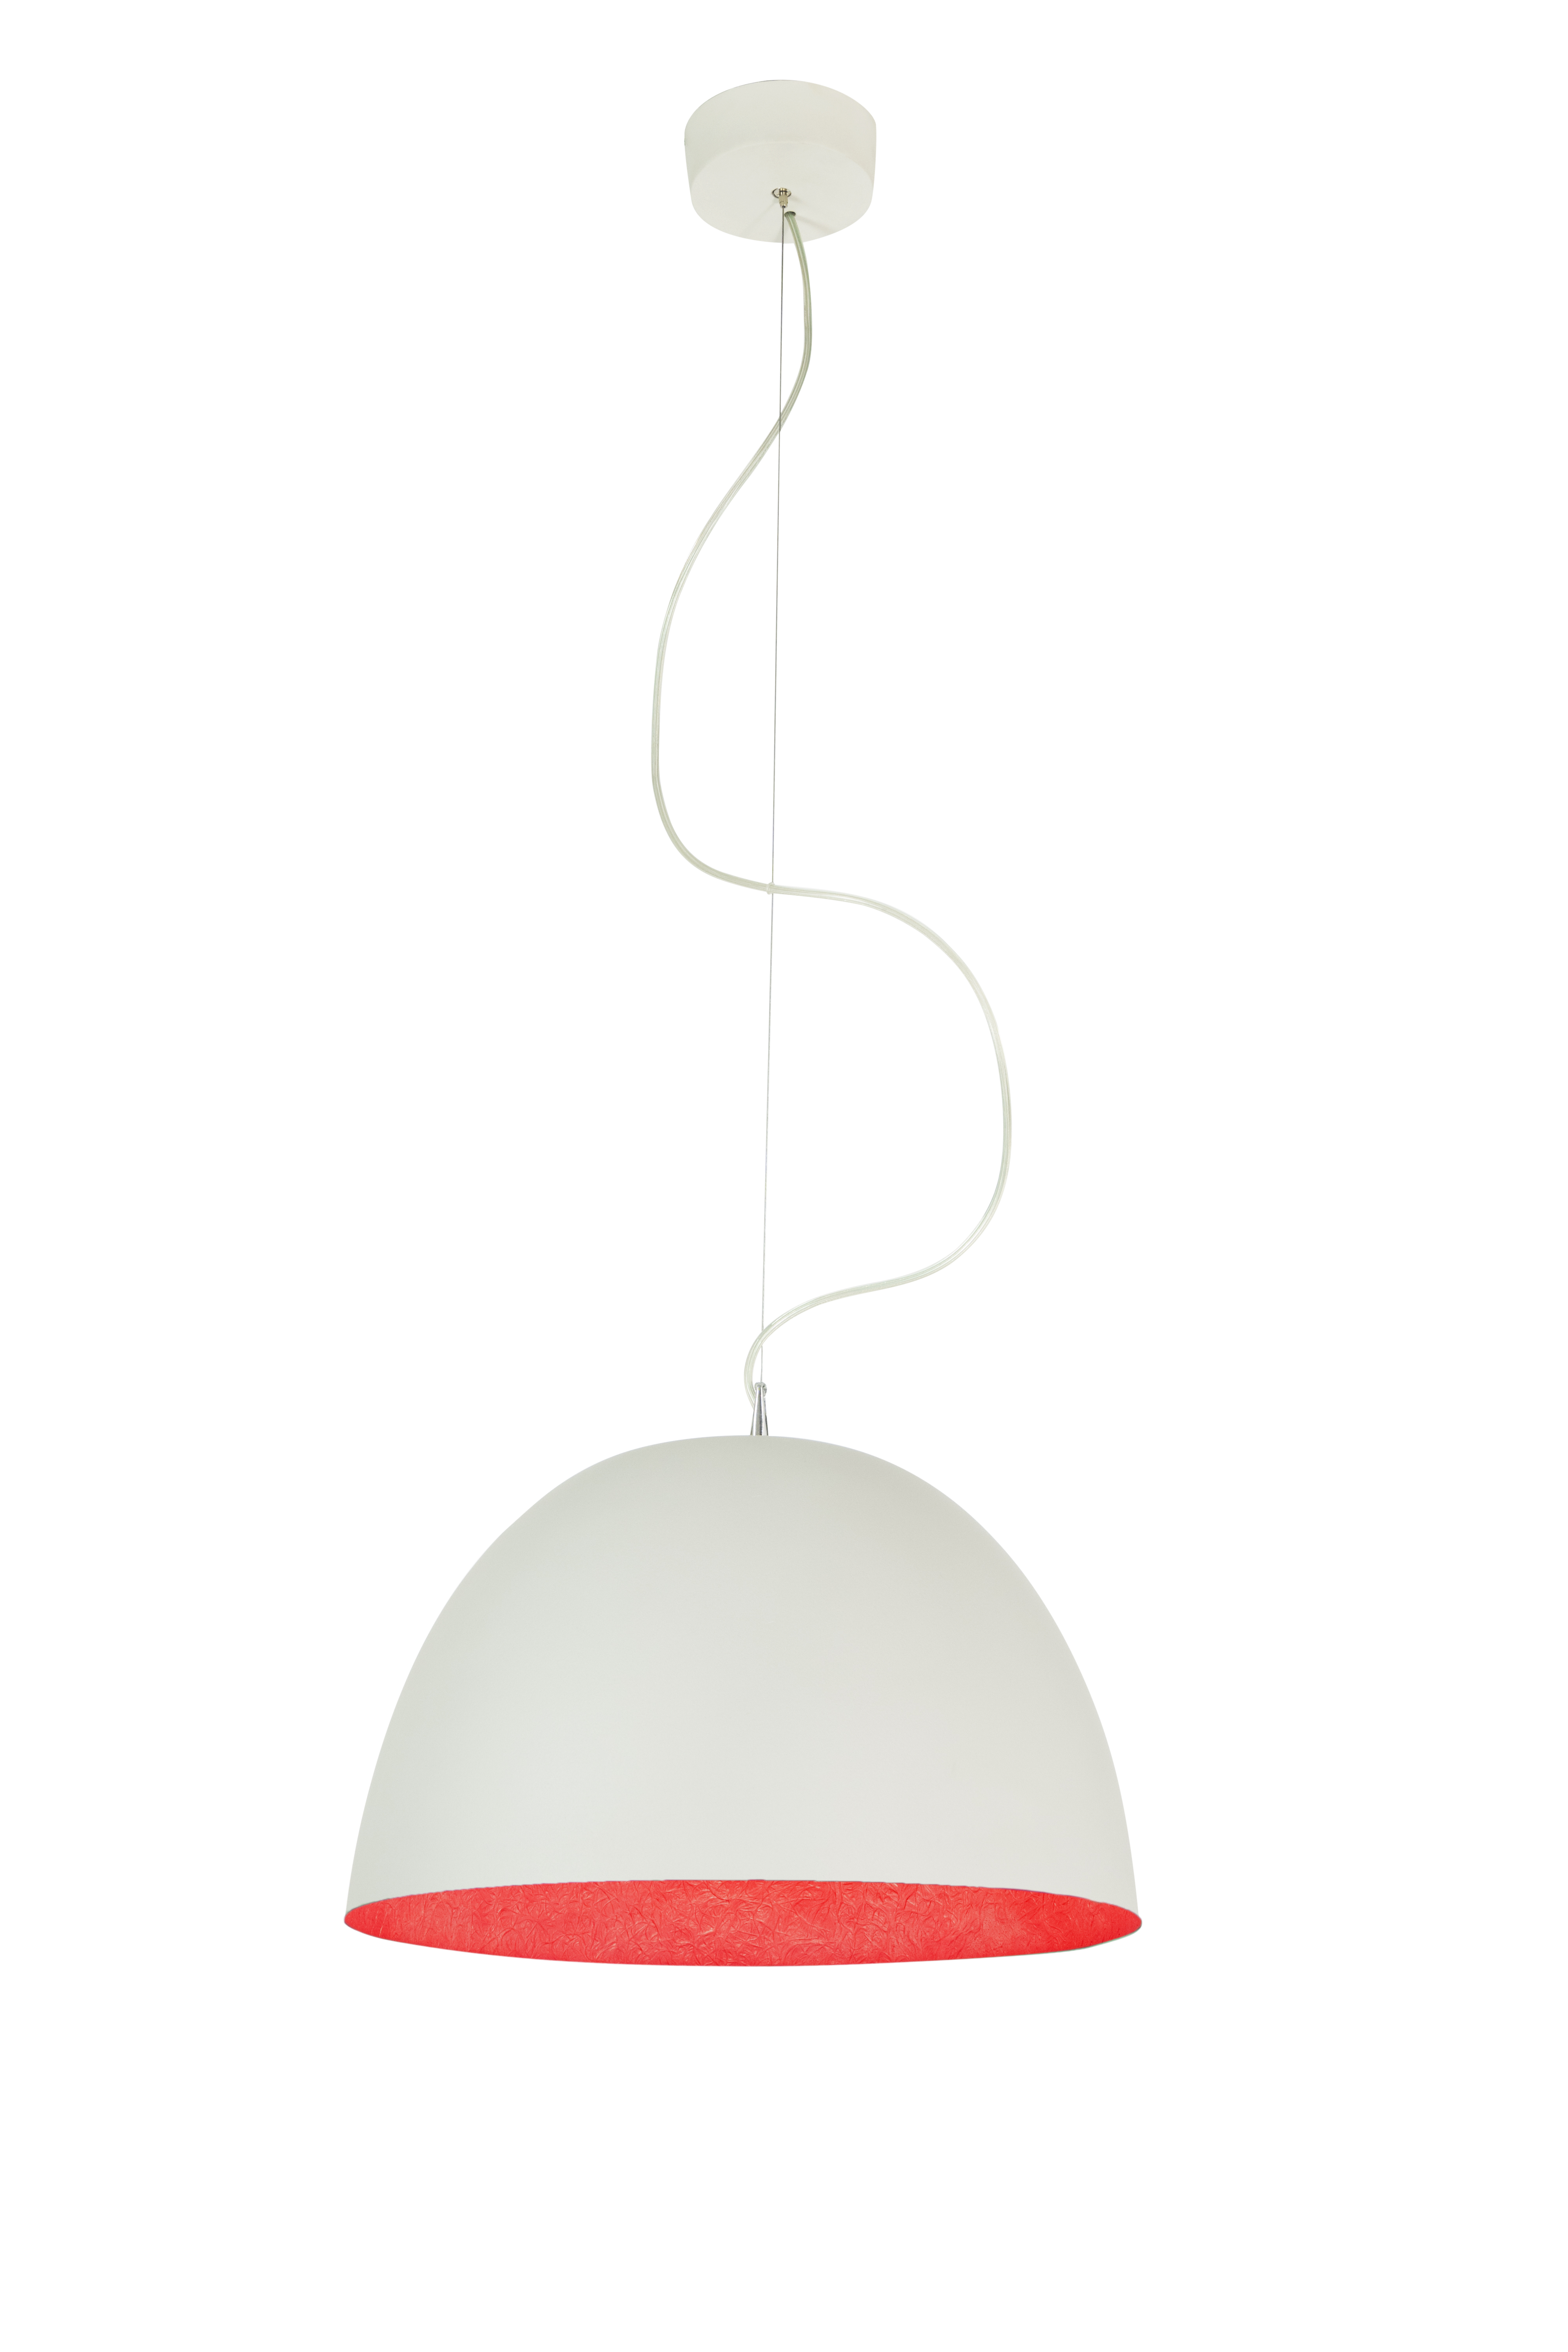 Pendant Lamp H2O Cemento In-Es Artdesign Collection Matt Color White Red Size 27,5 Cm  Diam. 46 Cm